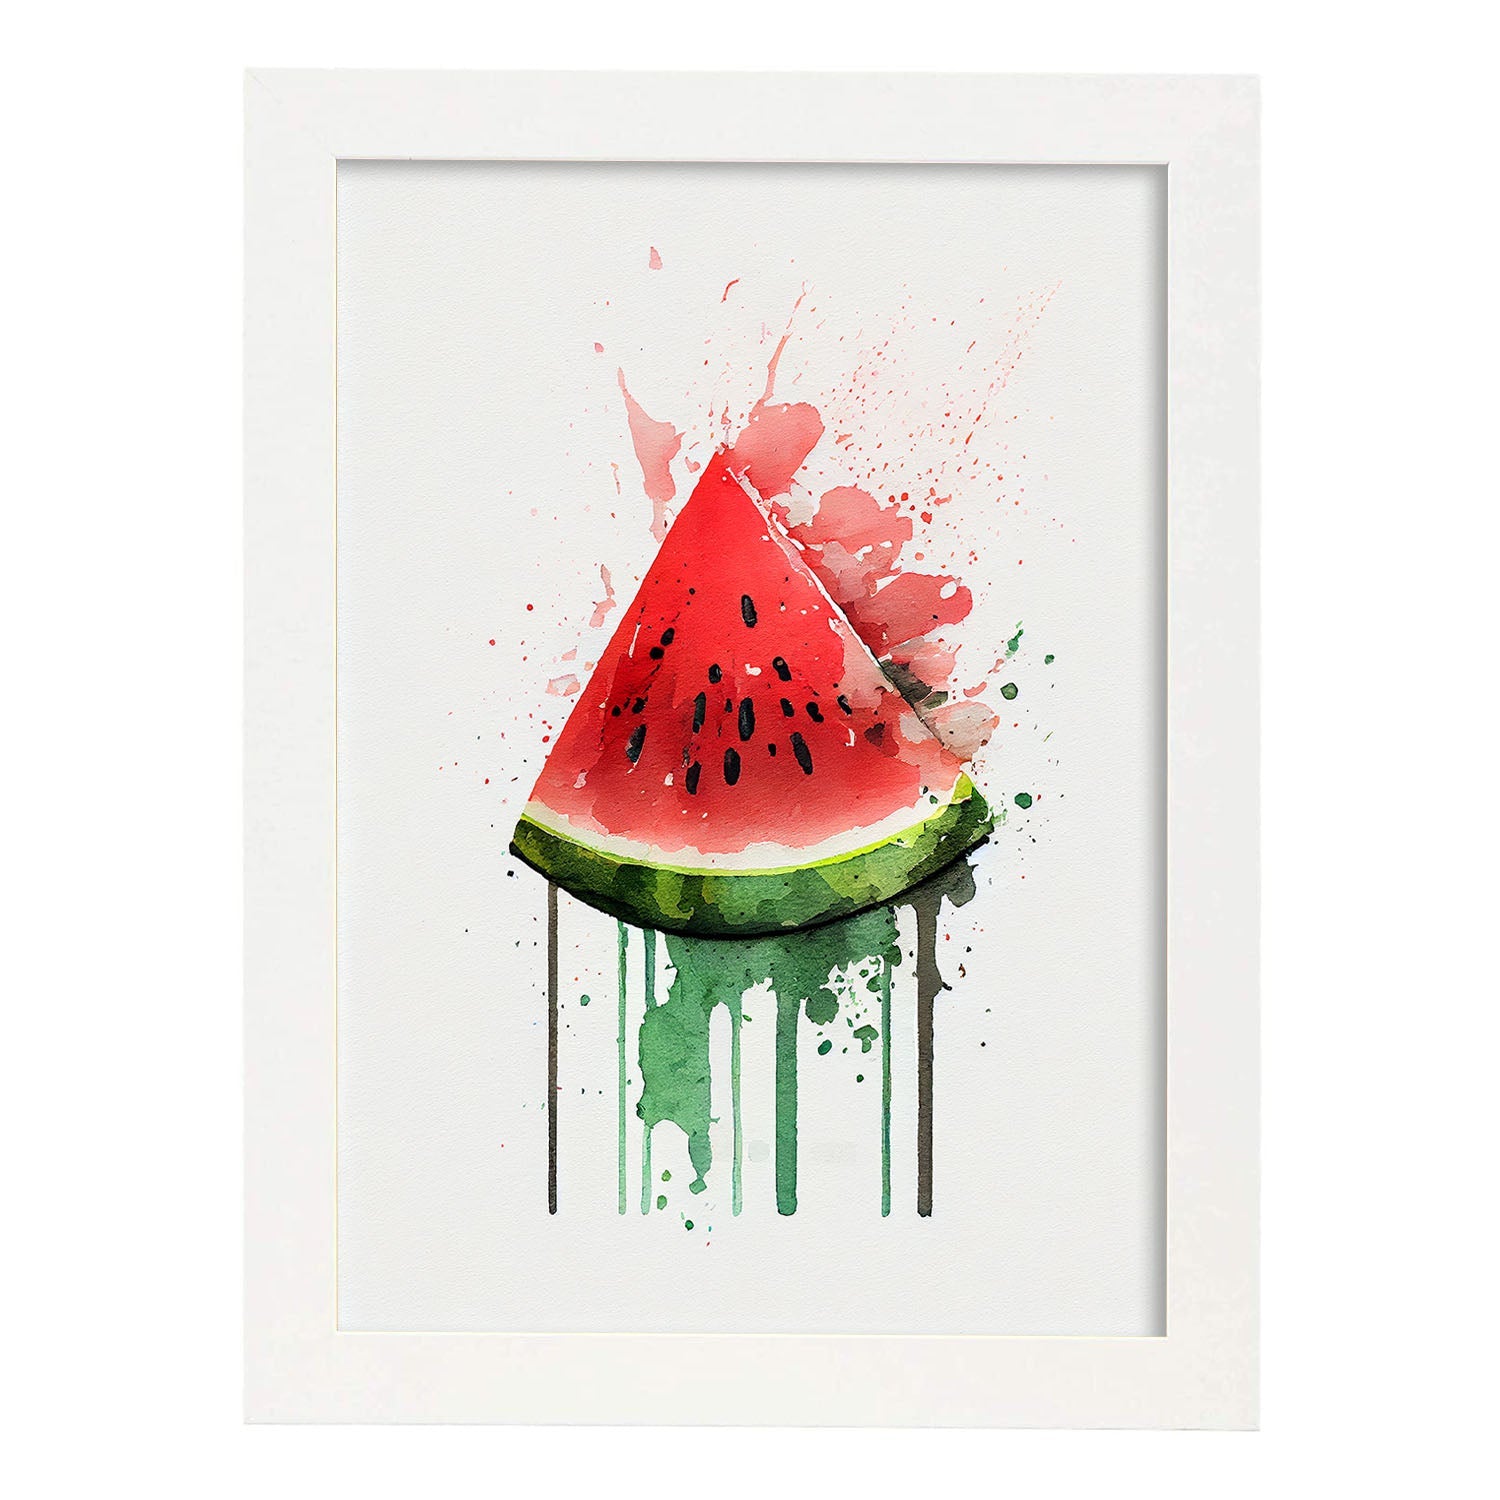 Nacnic minimalist Watermelon_2. Aesthetic Wall Art Prints for Bedroom or Living Room Design.-Artwork-Nacnic-A4-Marco Blanco-Nacnic Estudio SL